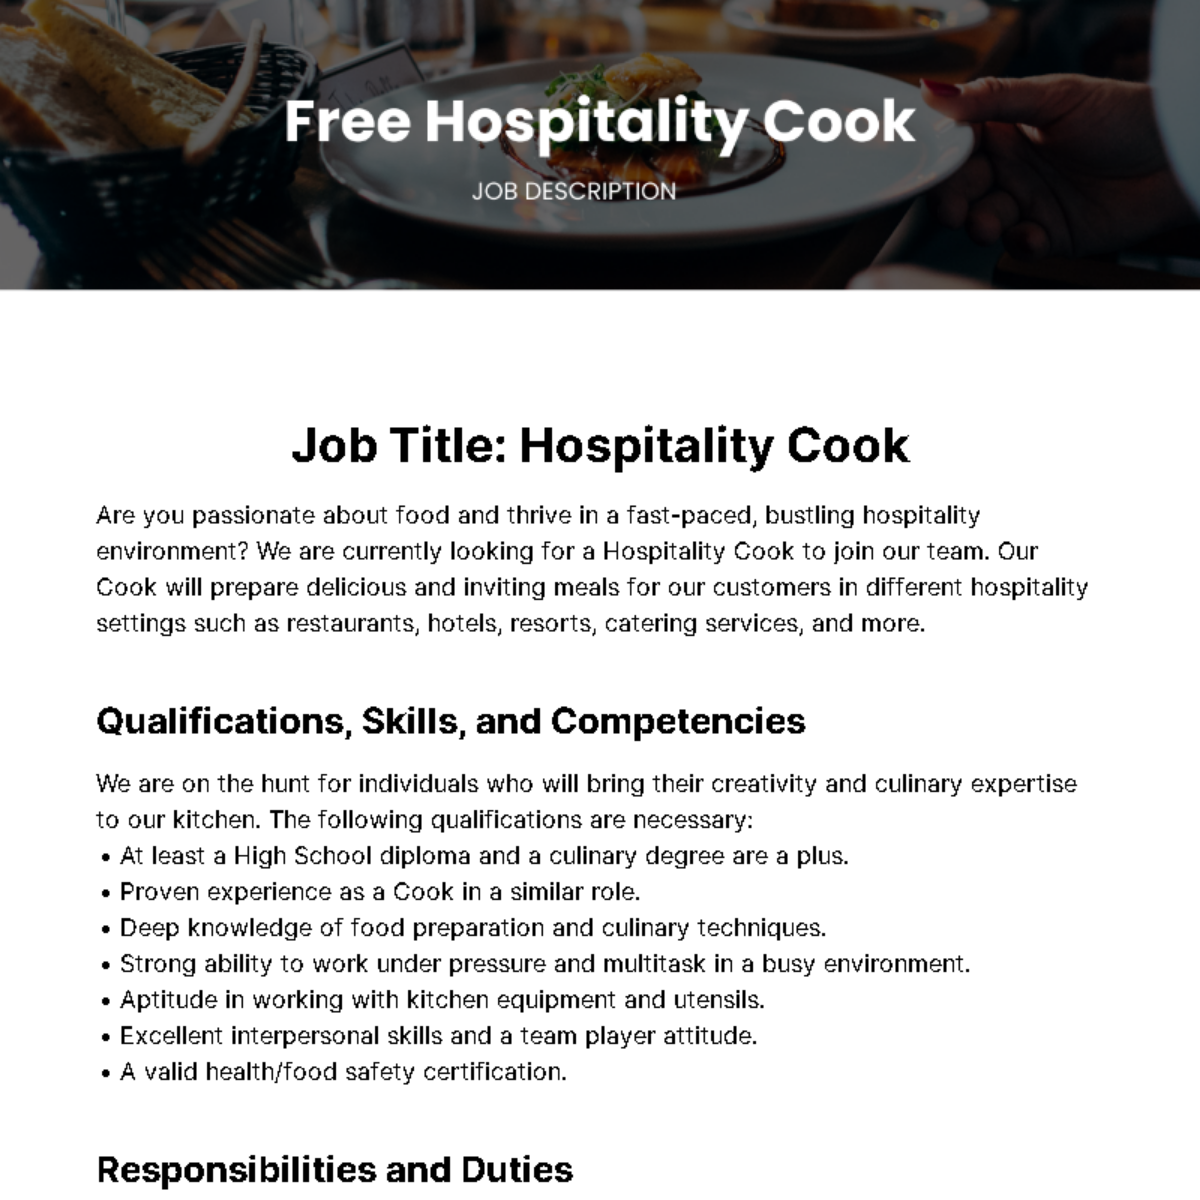 Free Hospitality Cook Job Description Template